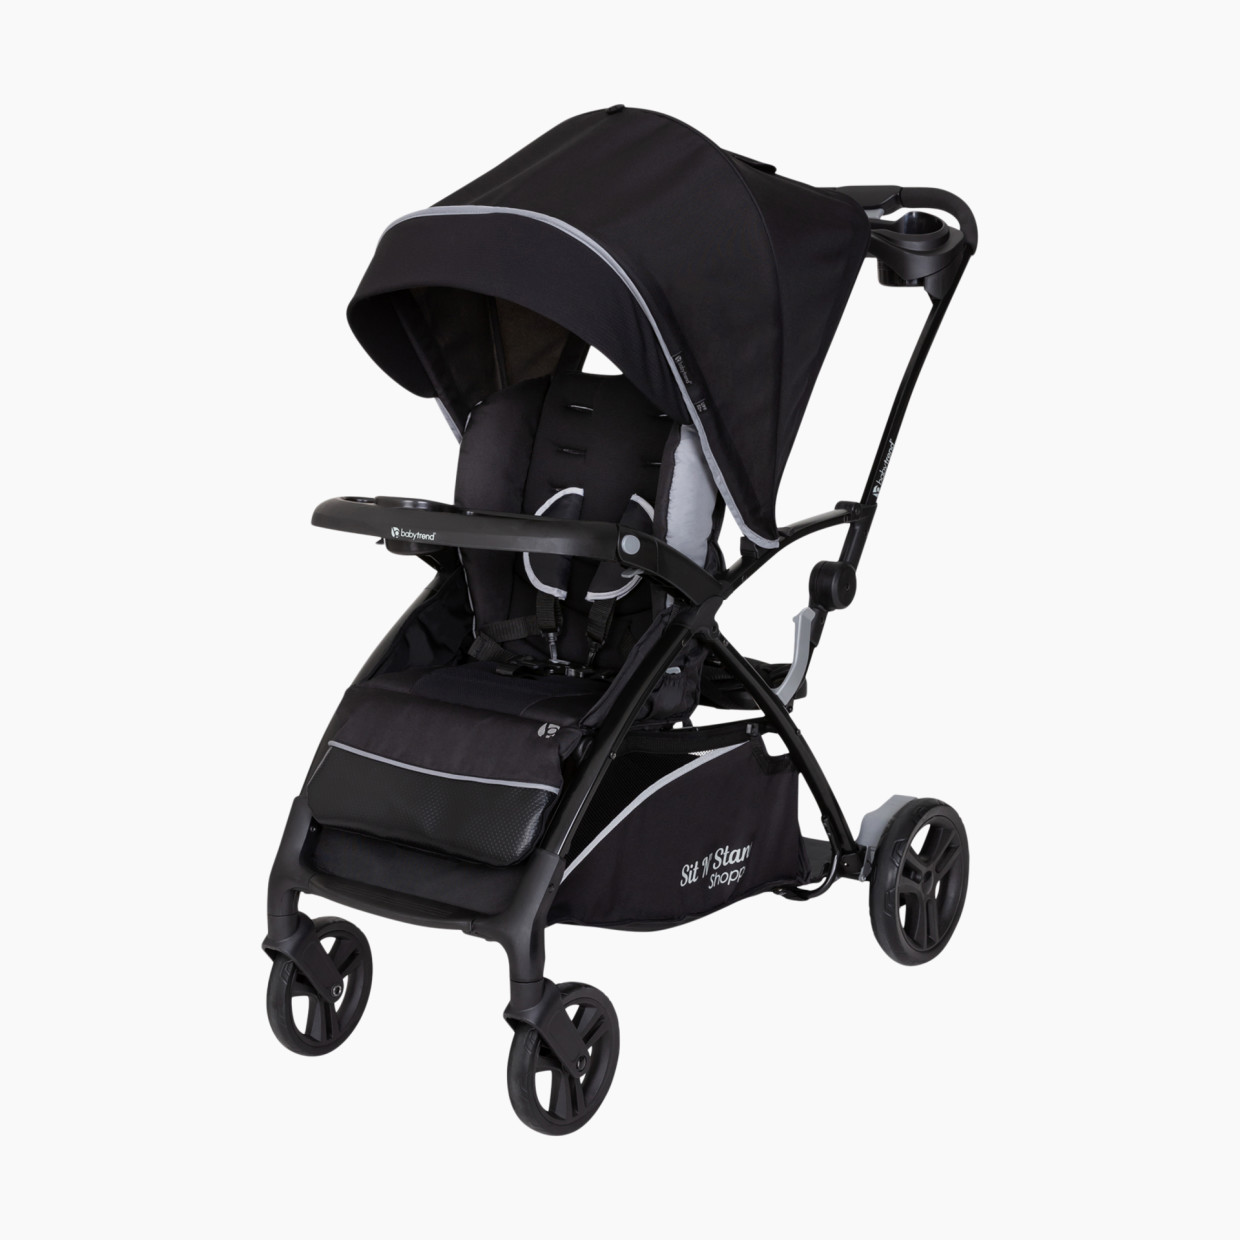 Baby Trend Sit N Stand 5-in-1 Shopper Stroller - Kona.